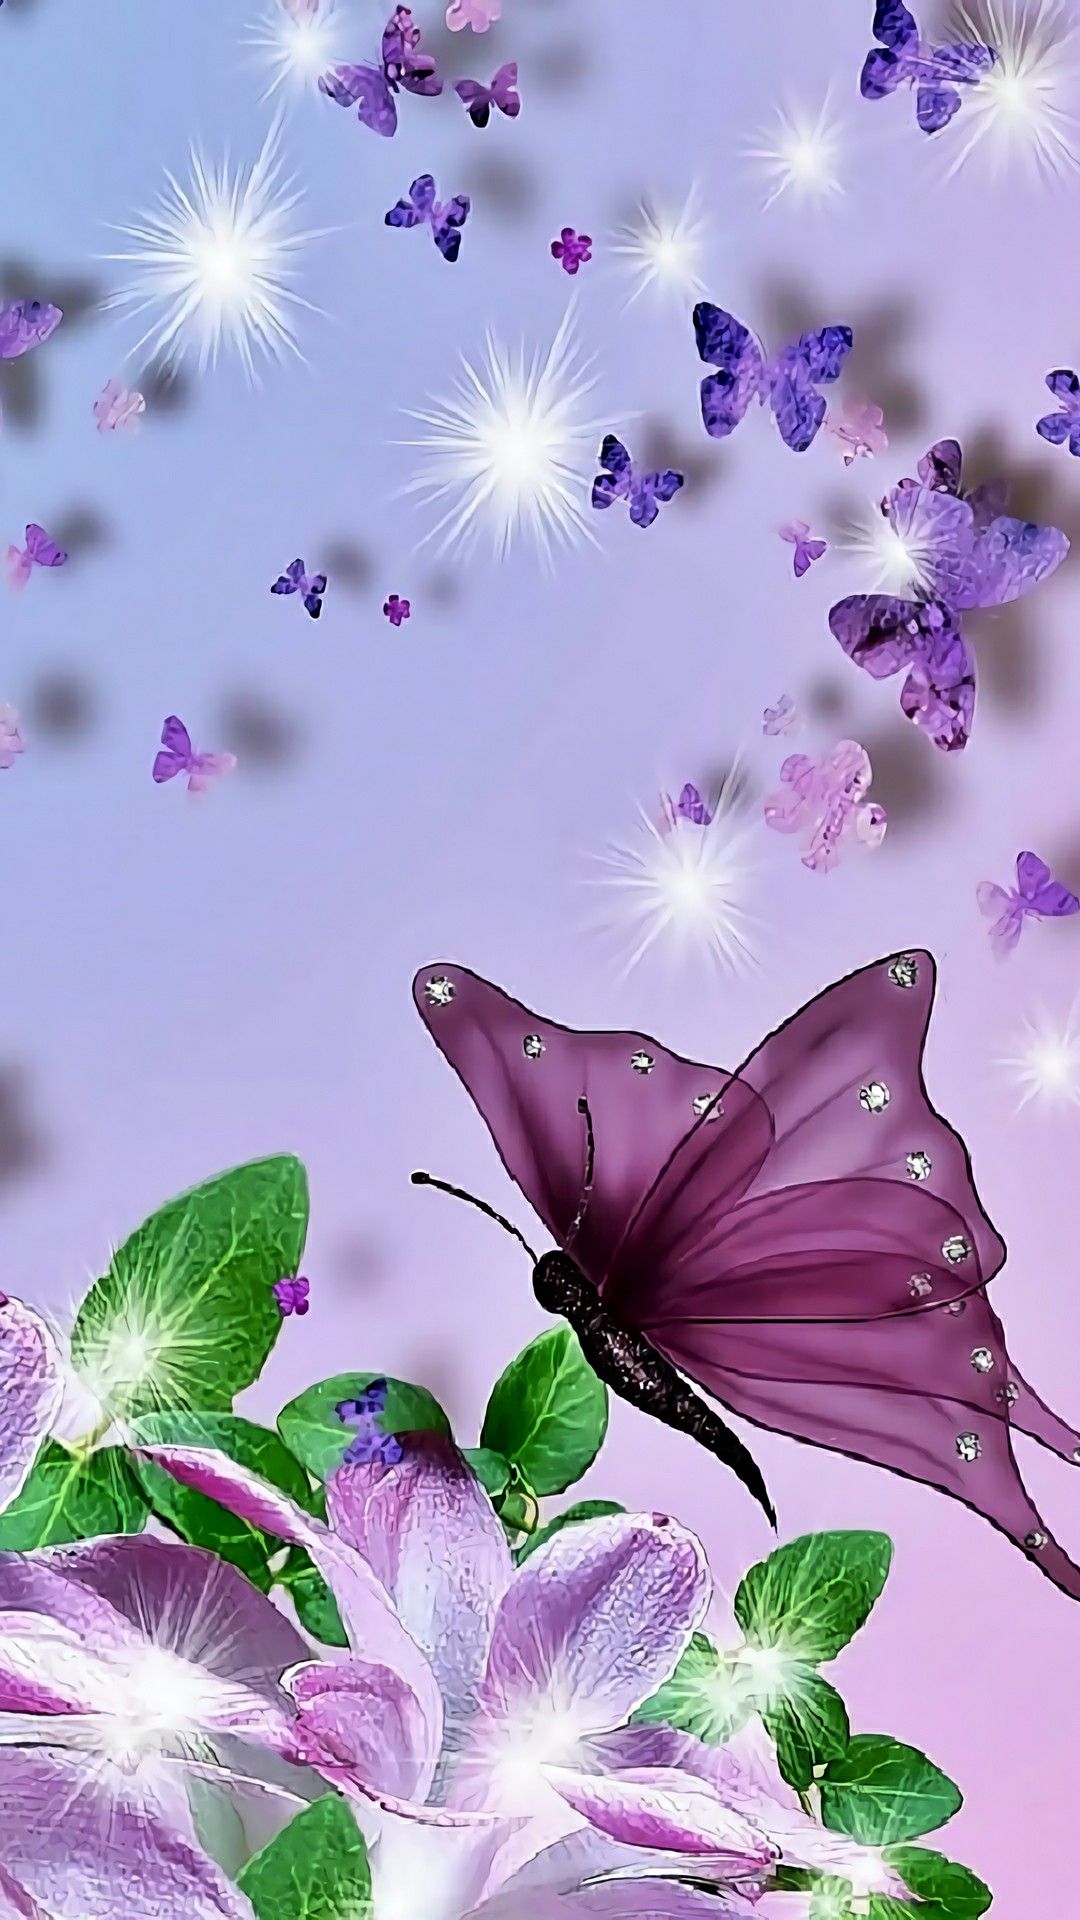 Whatsapp Wallpaper Flowers And Butterfly - 1080x1920 Wallpaper 